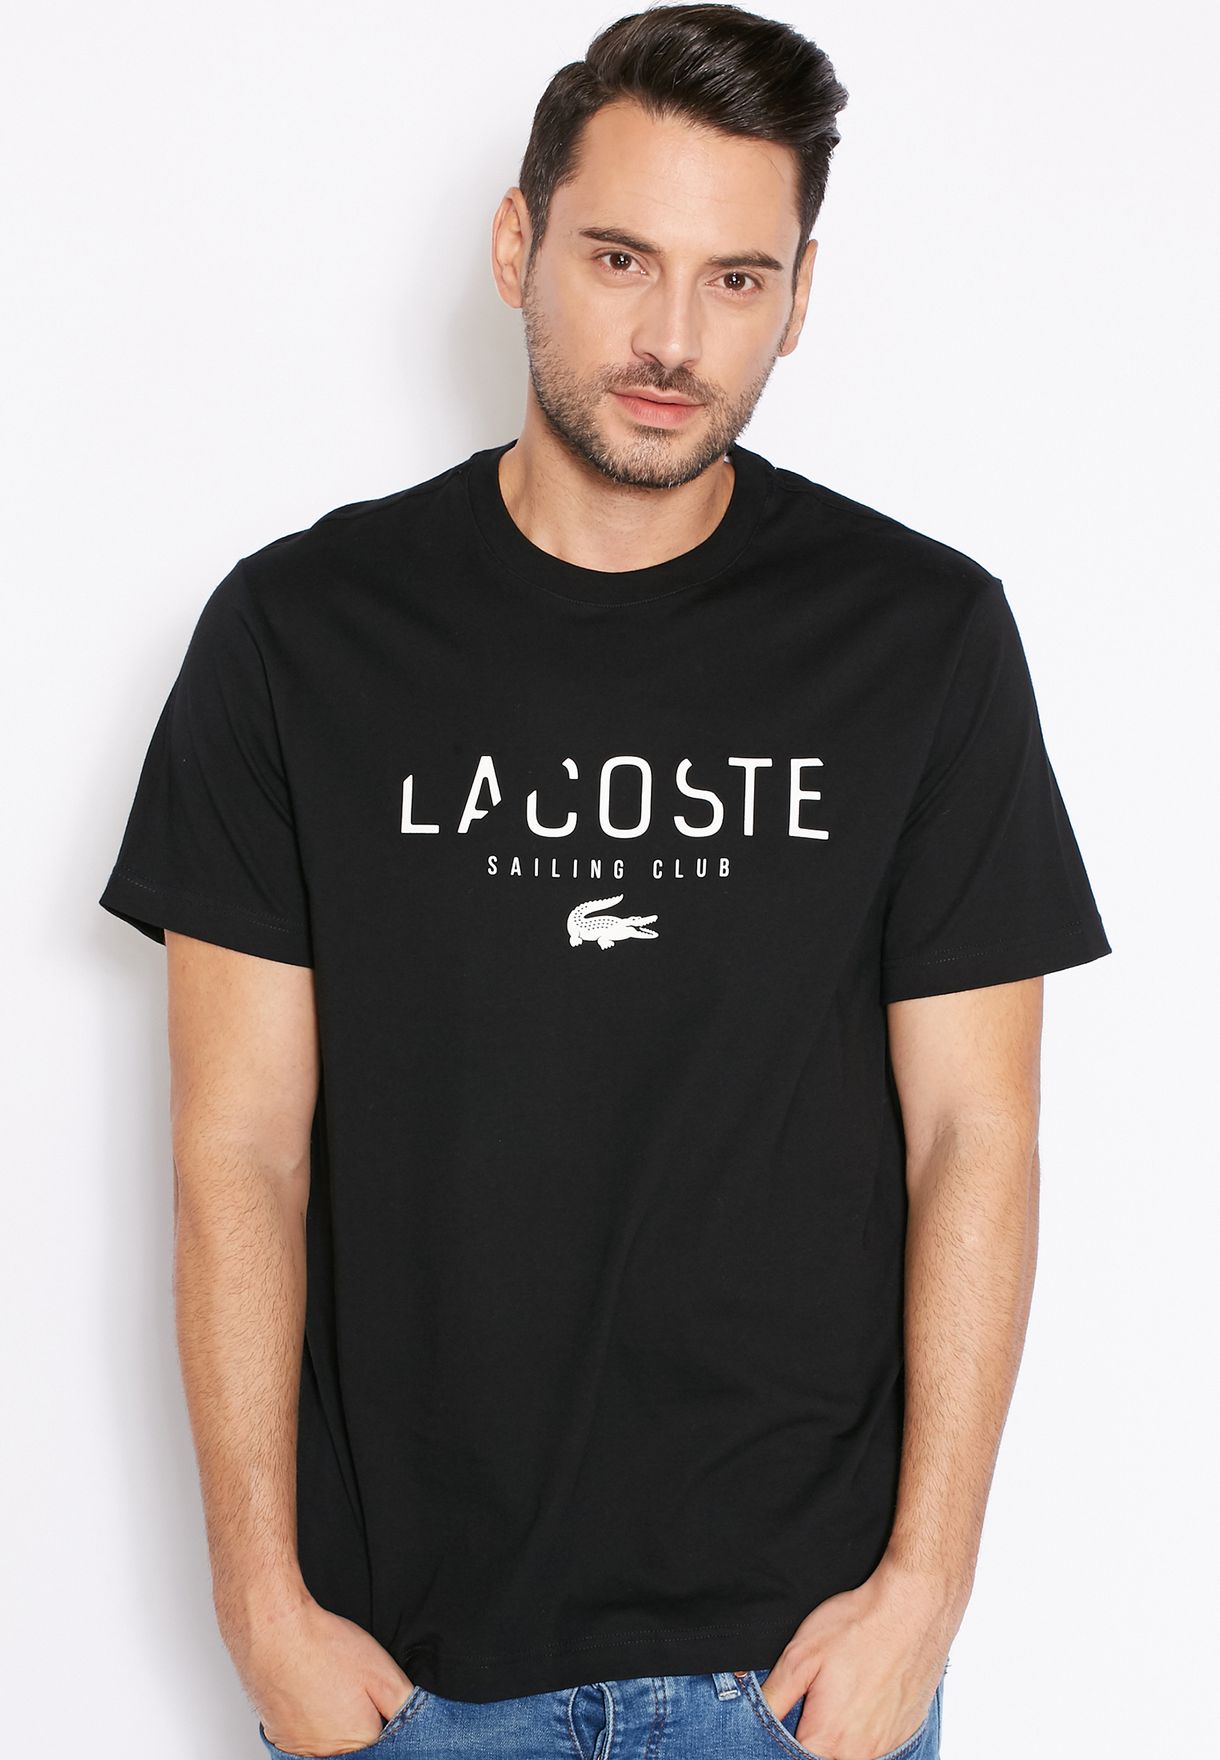 lacoste sailing club t shirt